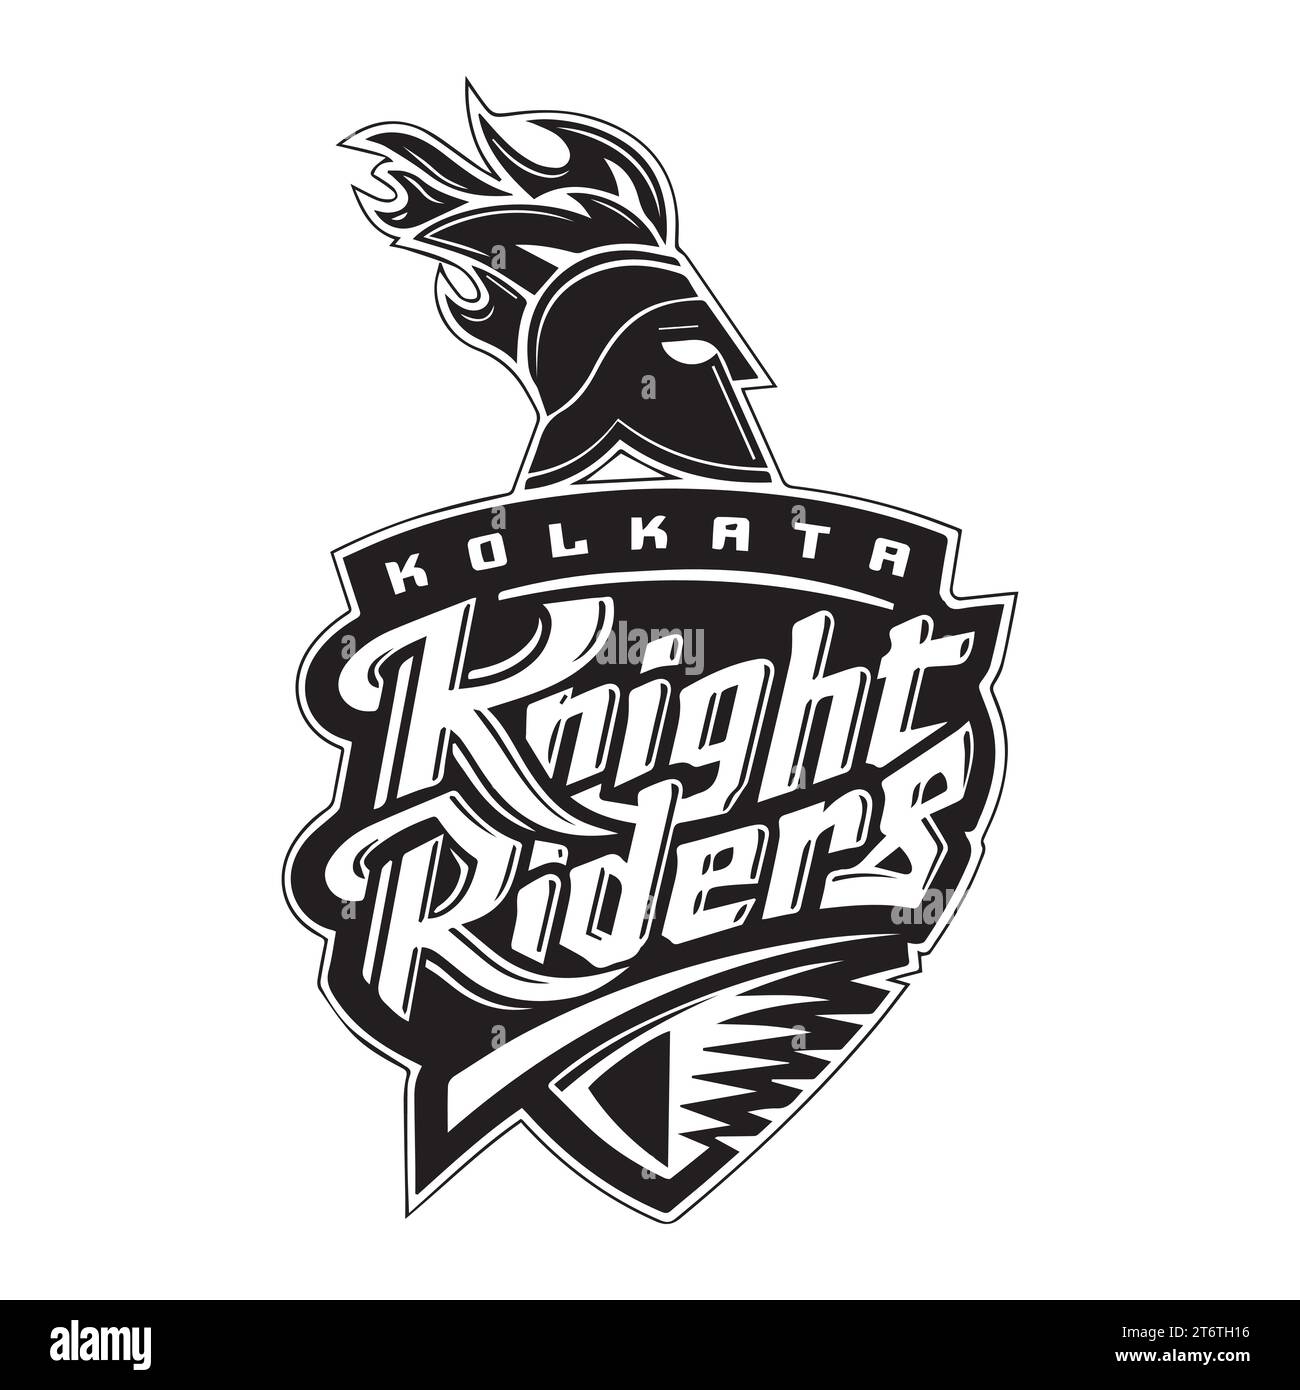 Kolkata Knight Riders logo Black style Club de cricket professionnel indien, Illustration vectorielle image modifiable abstraite Illustration de Vecteur